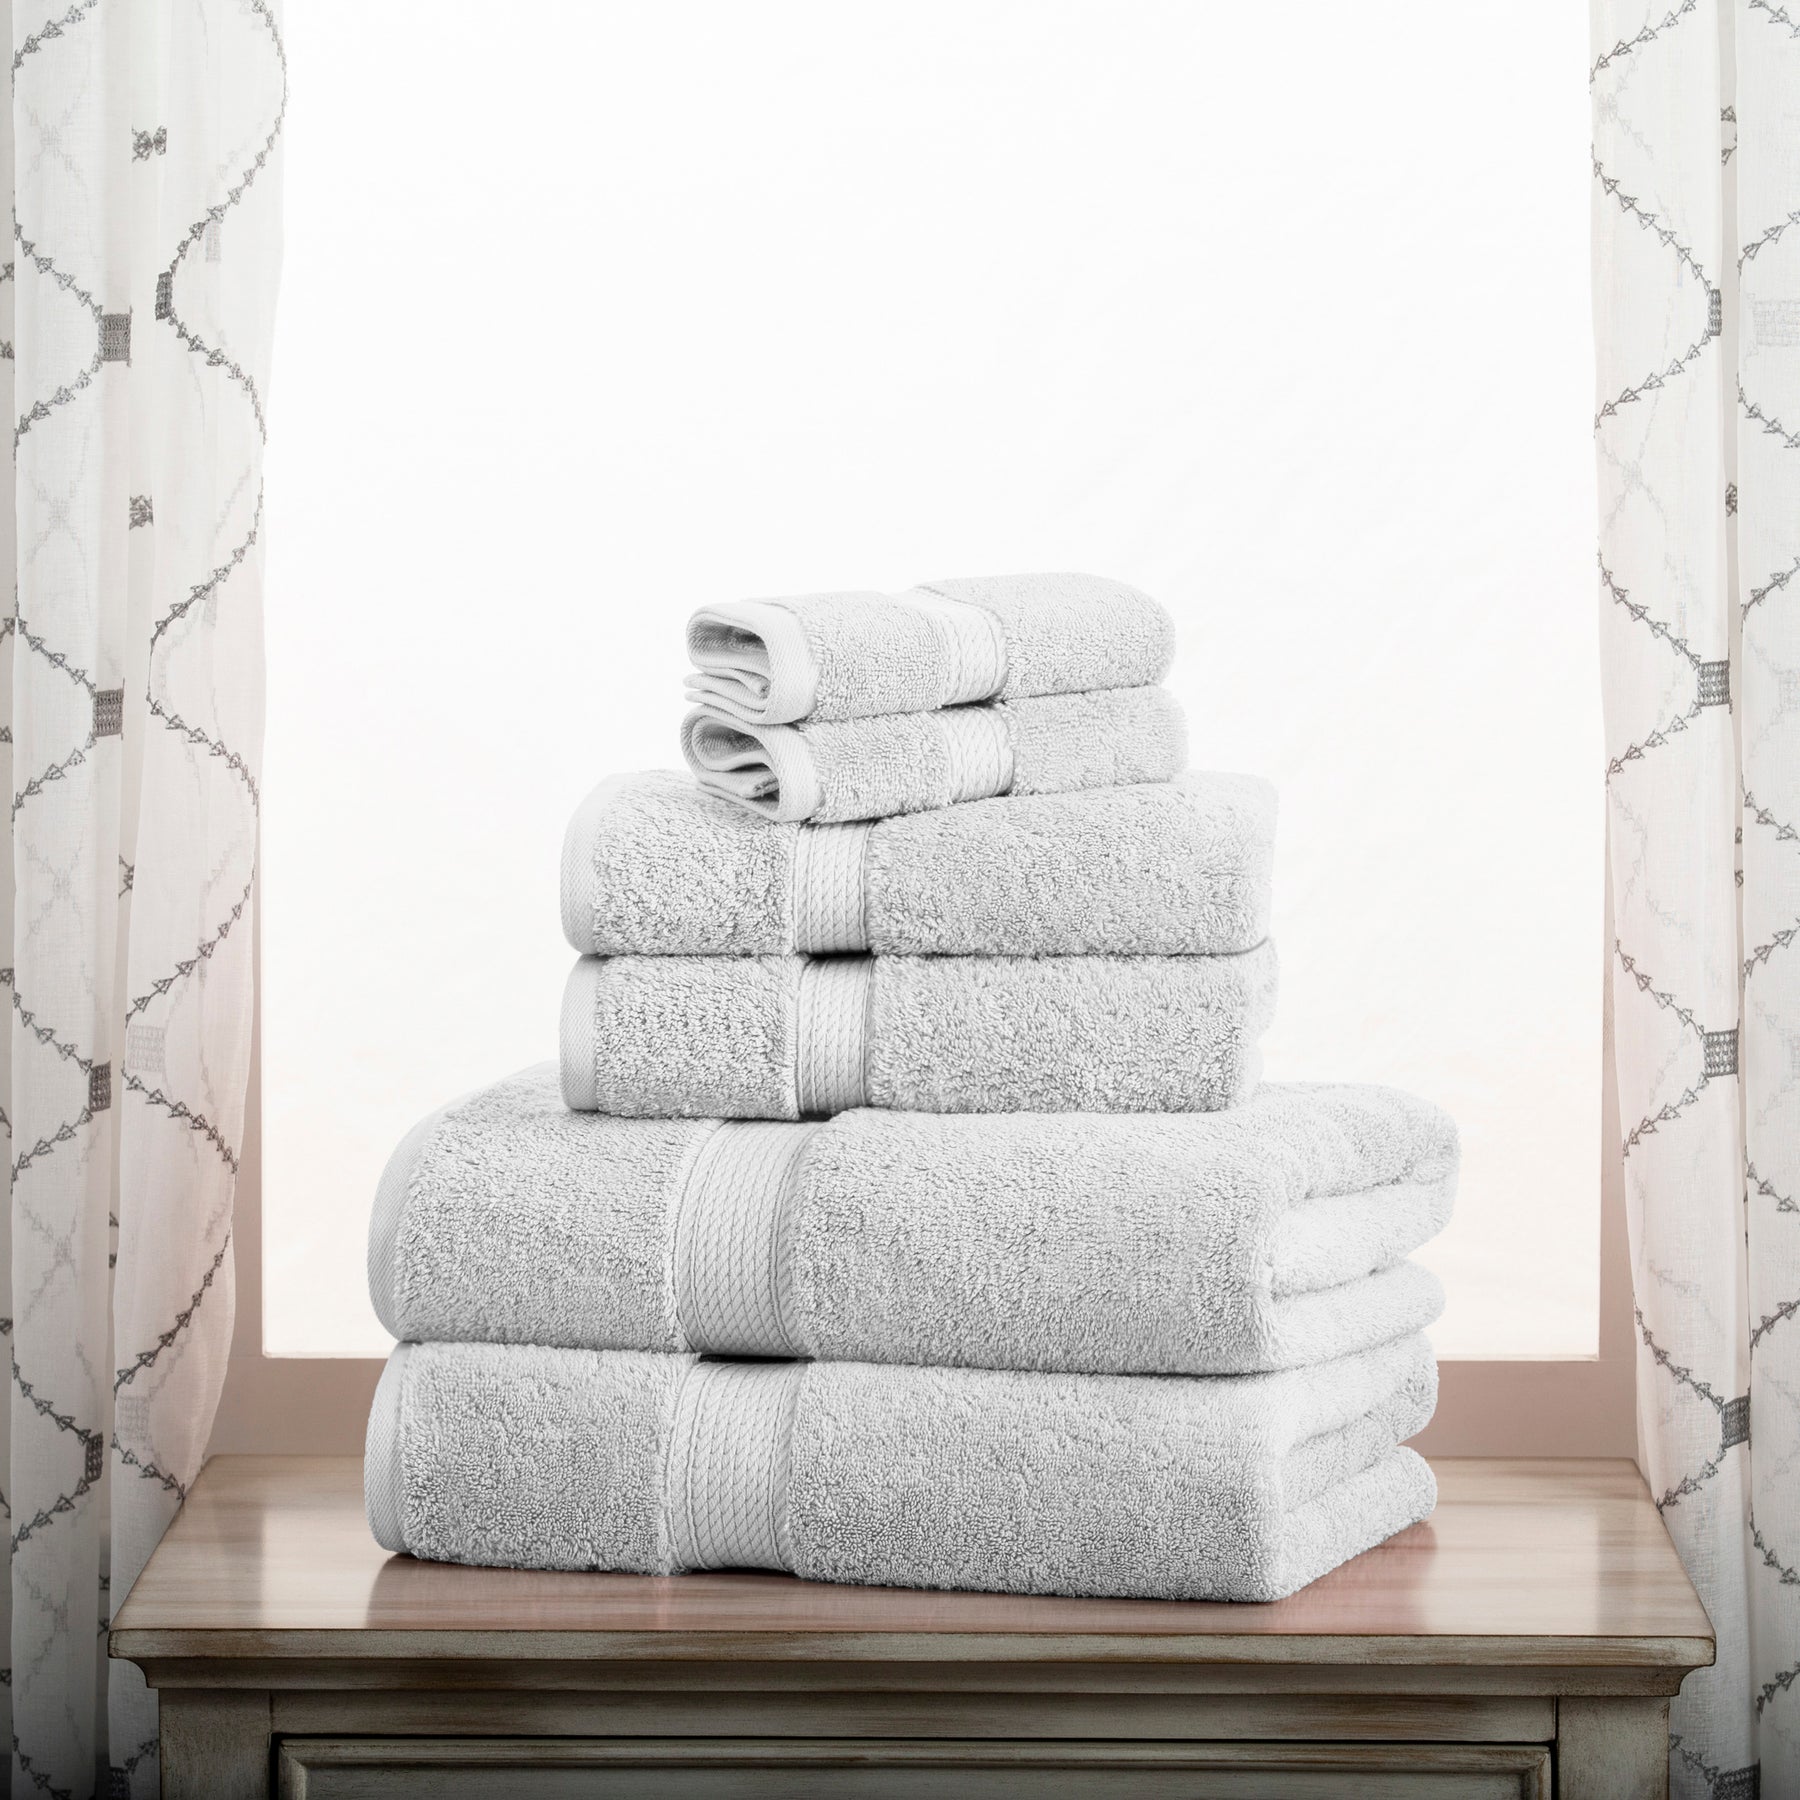 Bibb Home 6 Piece Egyptian Cotton Towel Set - 12 Colors - Solid White 